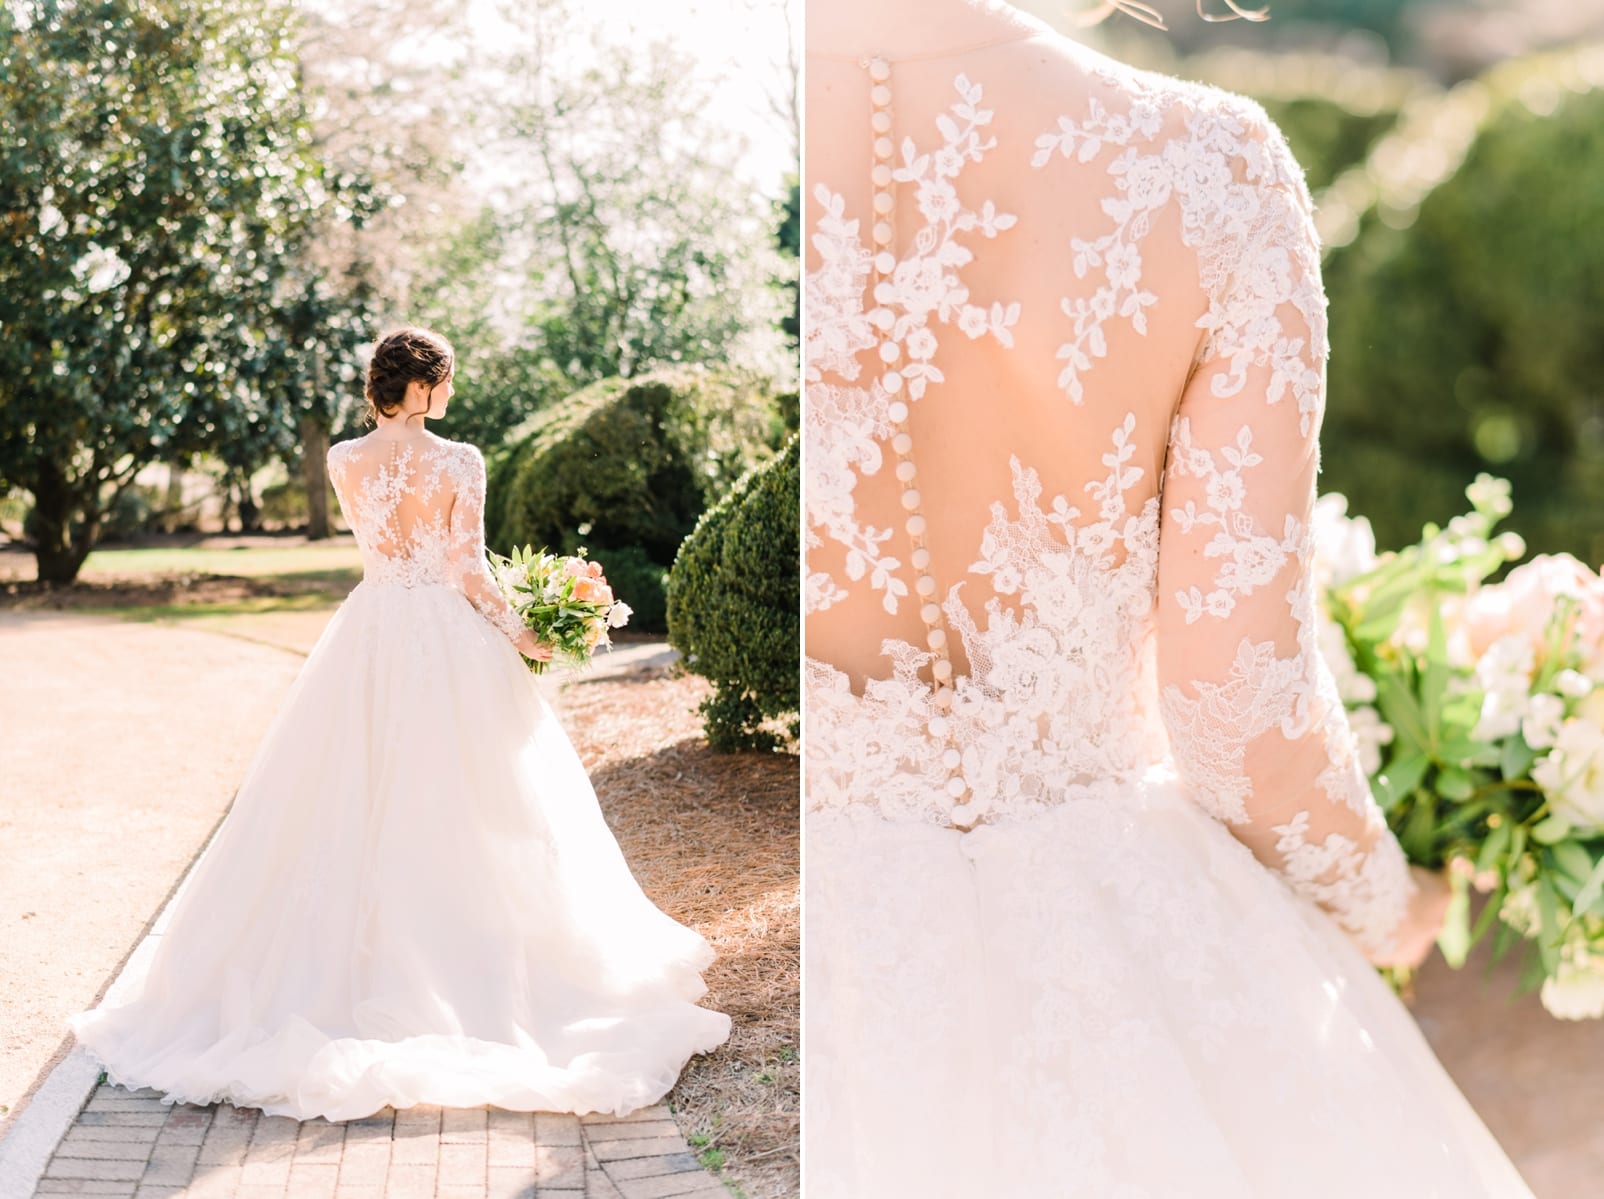 tre bella wedding dress lace back close up photo